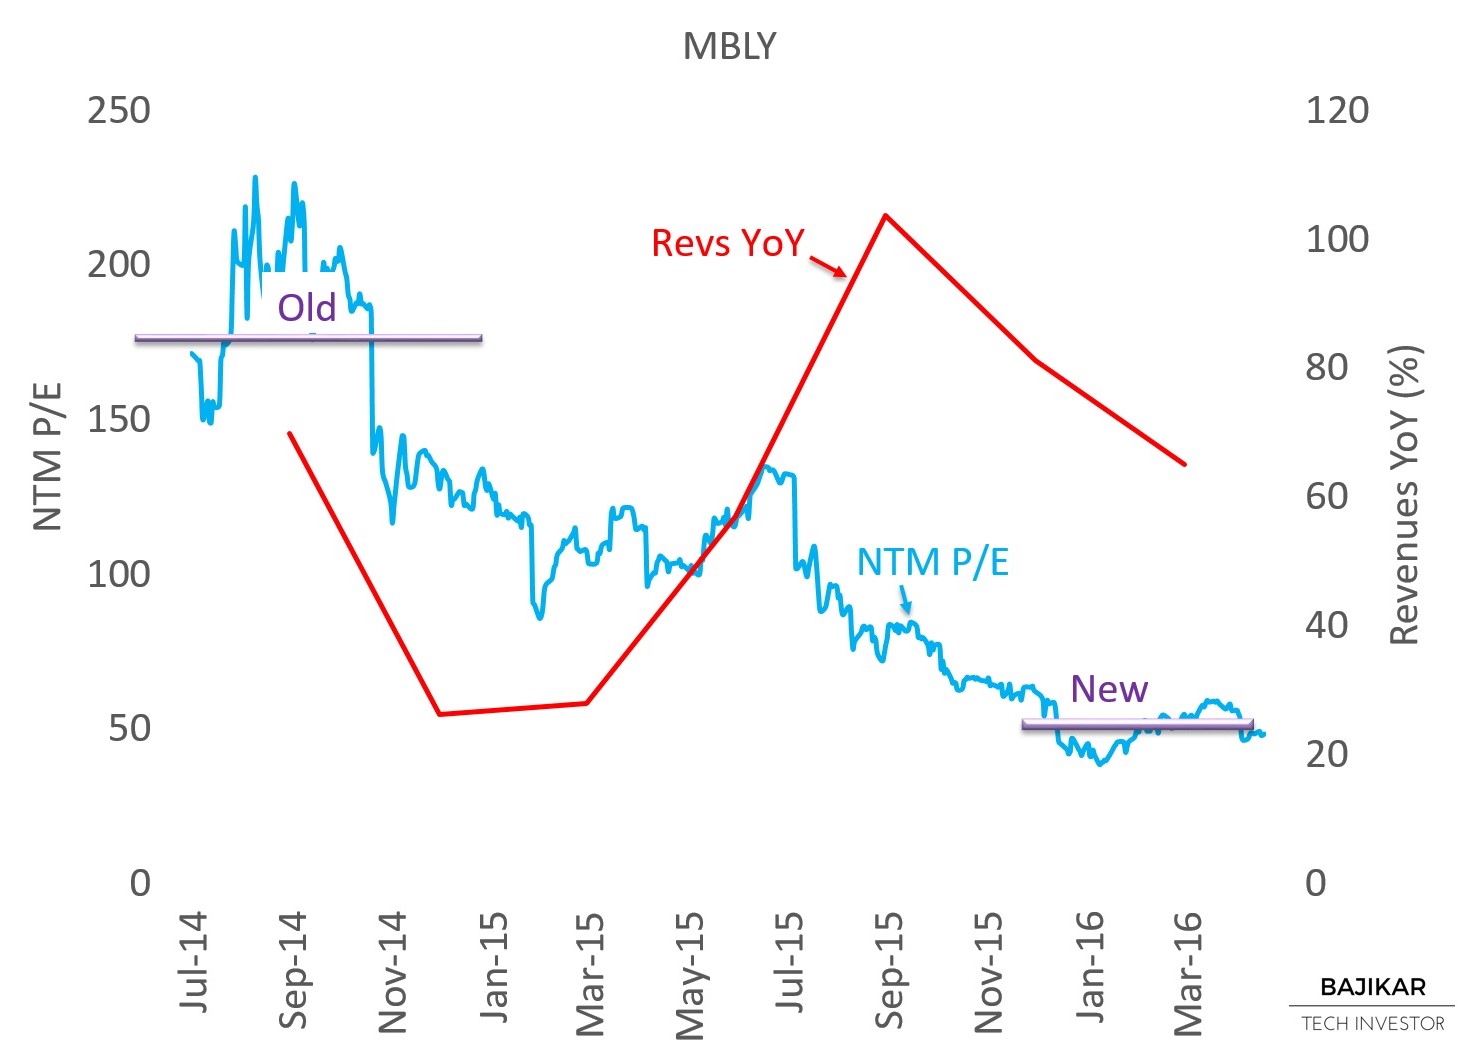 MBLY NTM P/E vs. YoY Revenues